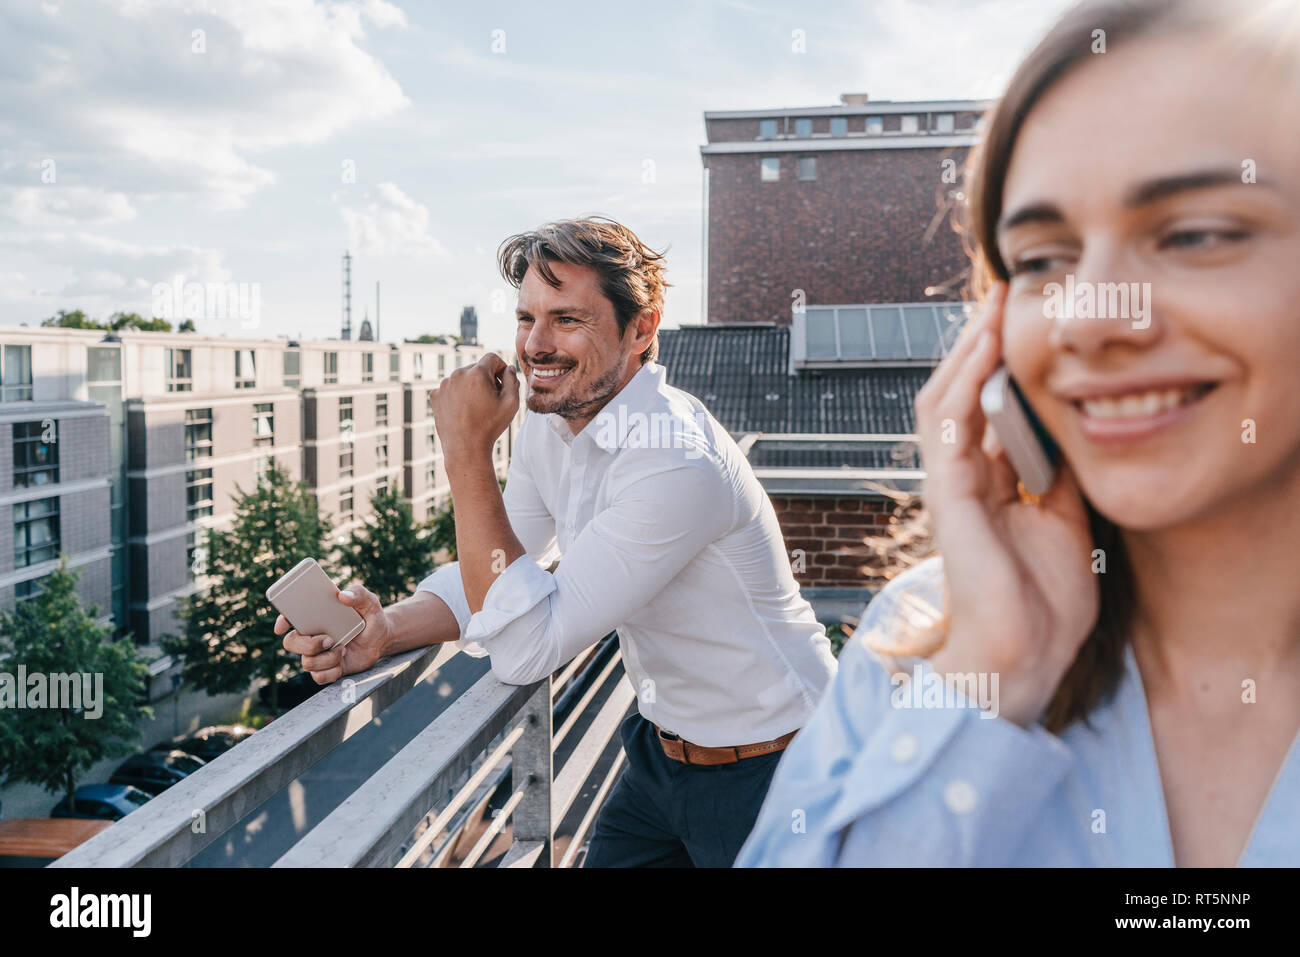 Business people standing on balcony, using smartphone Stock Photo